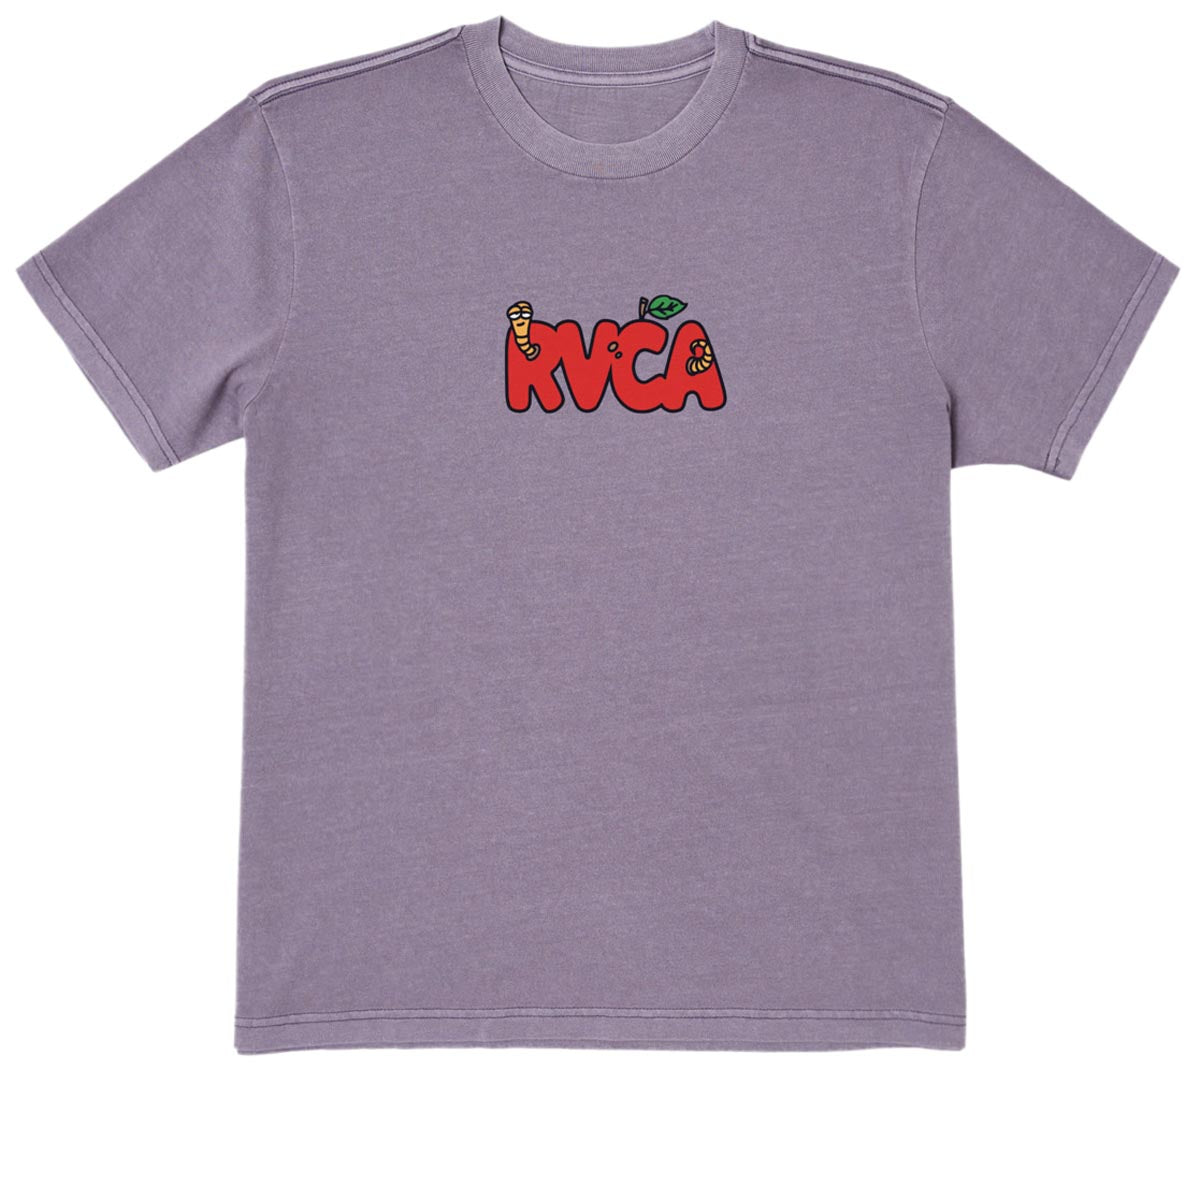 RVCA Apple Aday T-Shirt - Purple Sage image 1